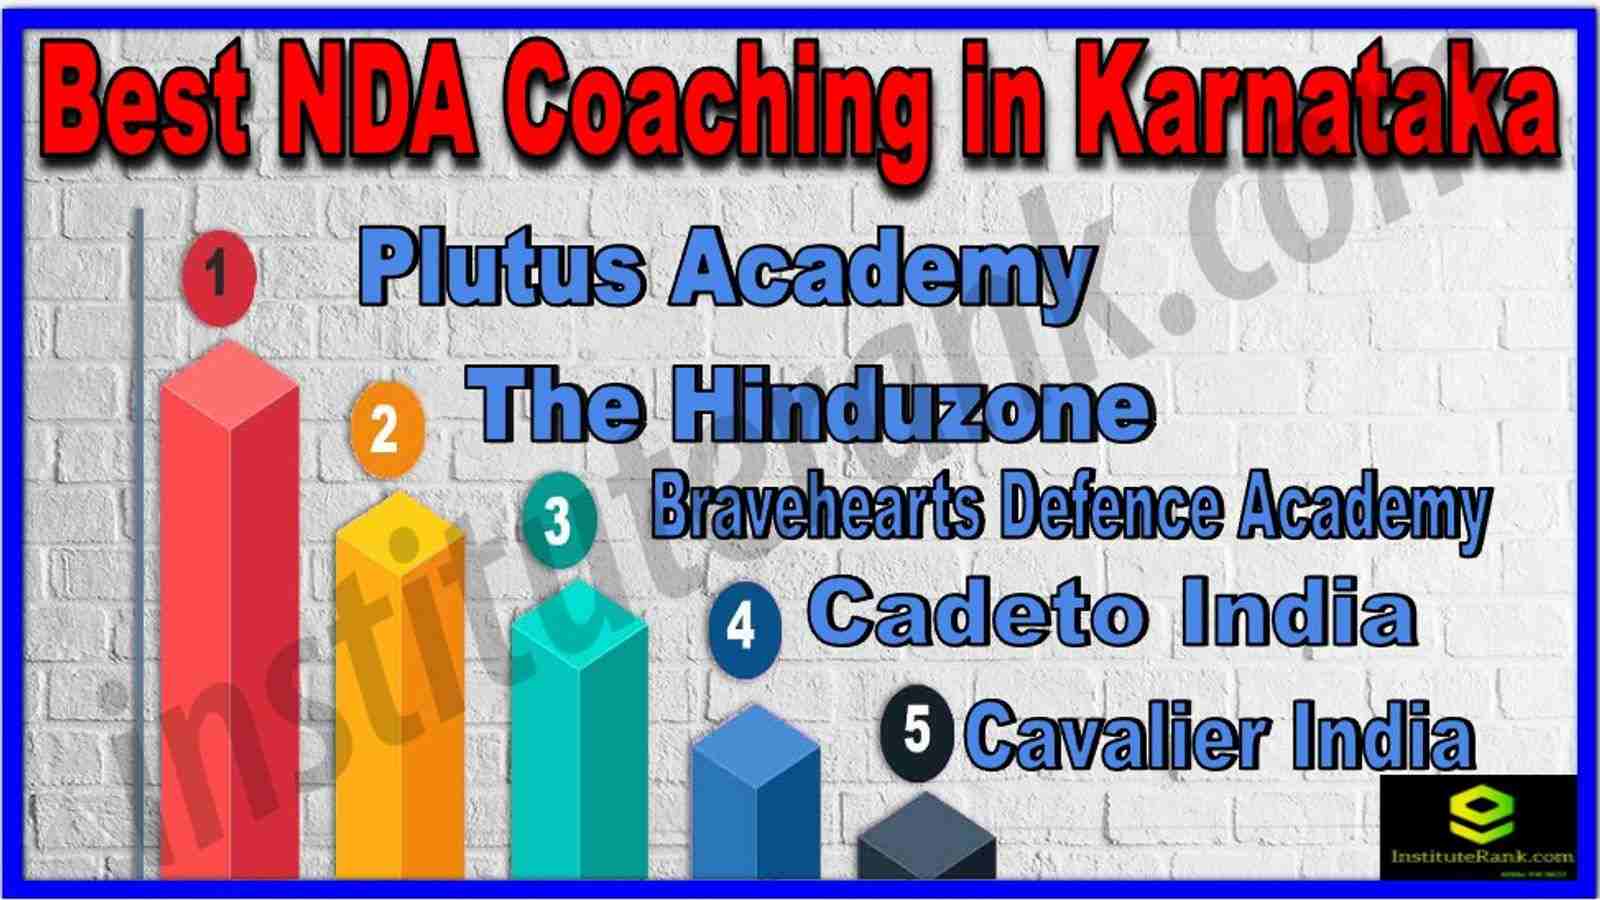 Best NDA Coaching in Karnataka